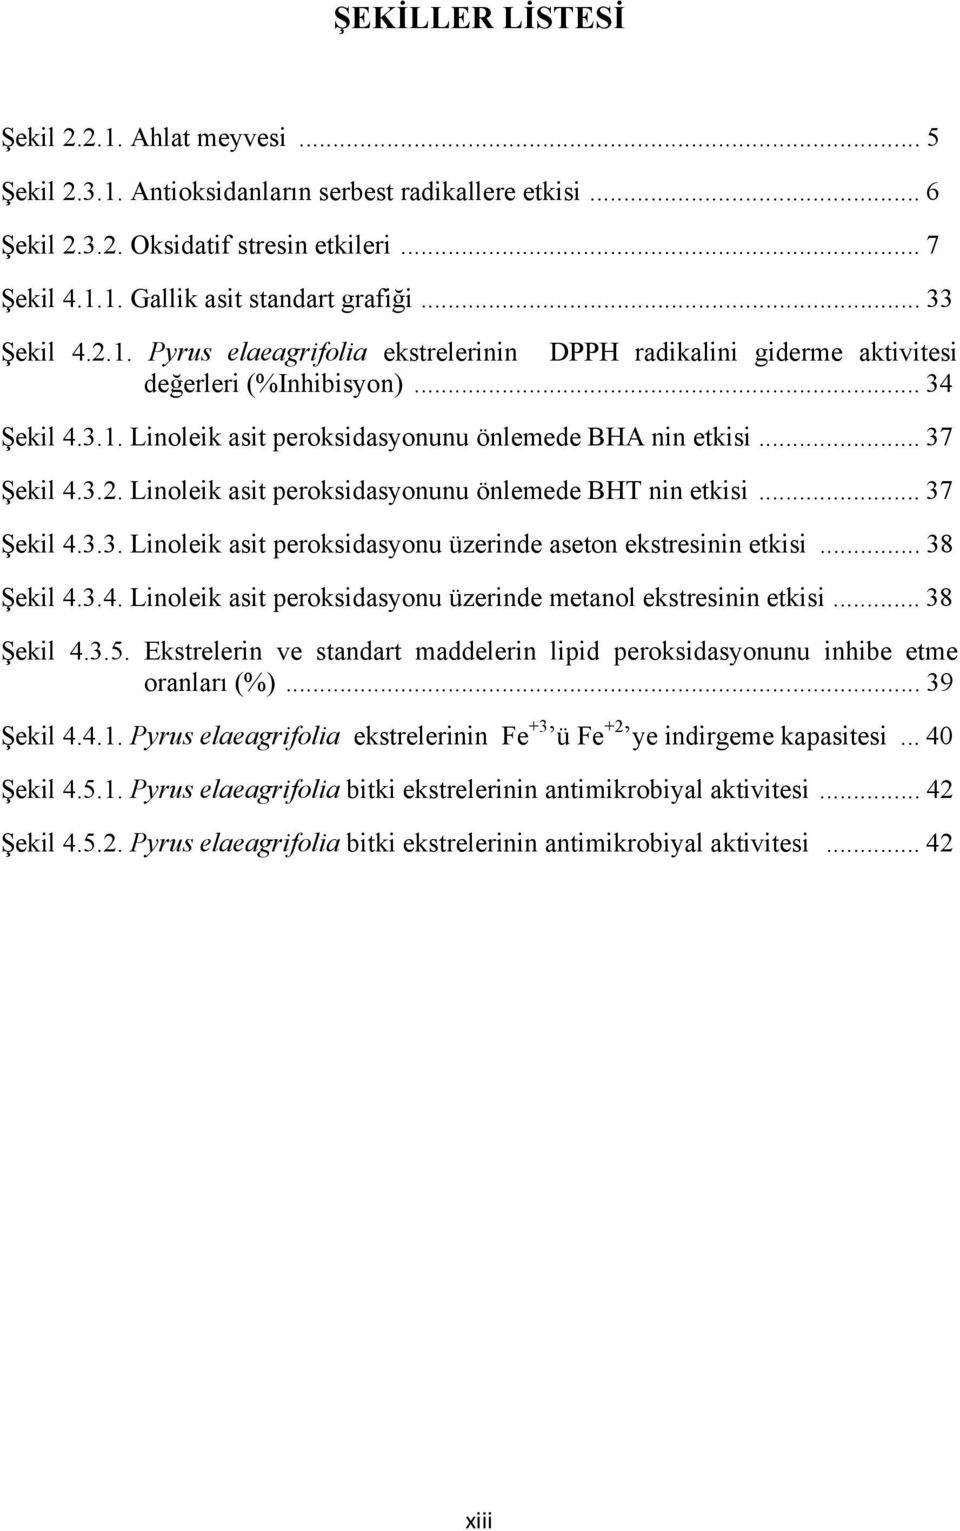 3.2. Linoleik asit peroksidasyonunu önlemede BHT nin etkisi... 37 Şekil 4.3.3. Linoleik asit peroksidasyonu üzerinde aseton ekstresinin etkisi... 38 Şekil 4.3.4. Linoleik asit peroksidasyonu üzerinde metanol ekstresinin etkisi.